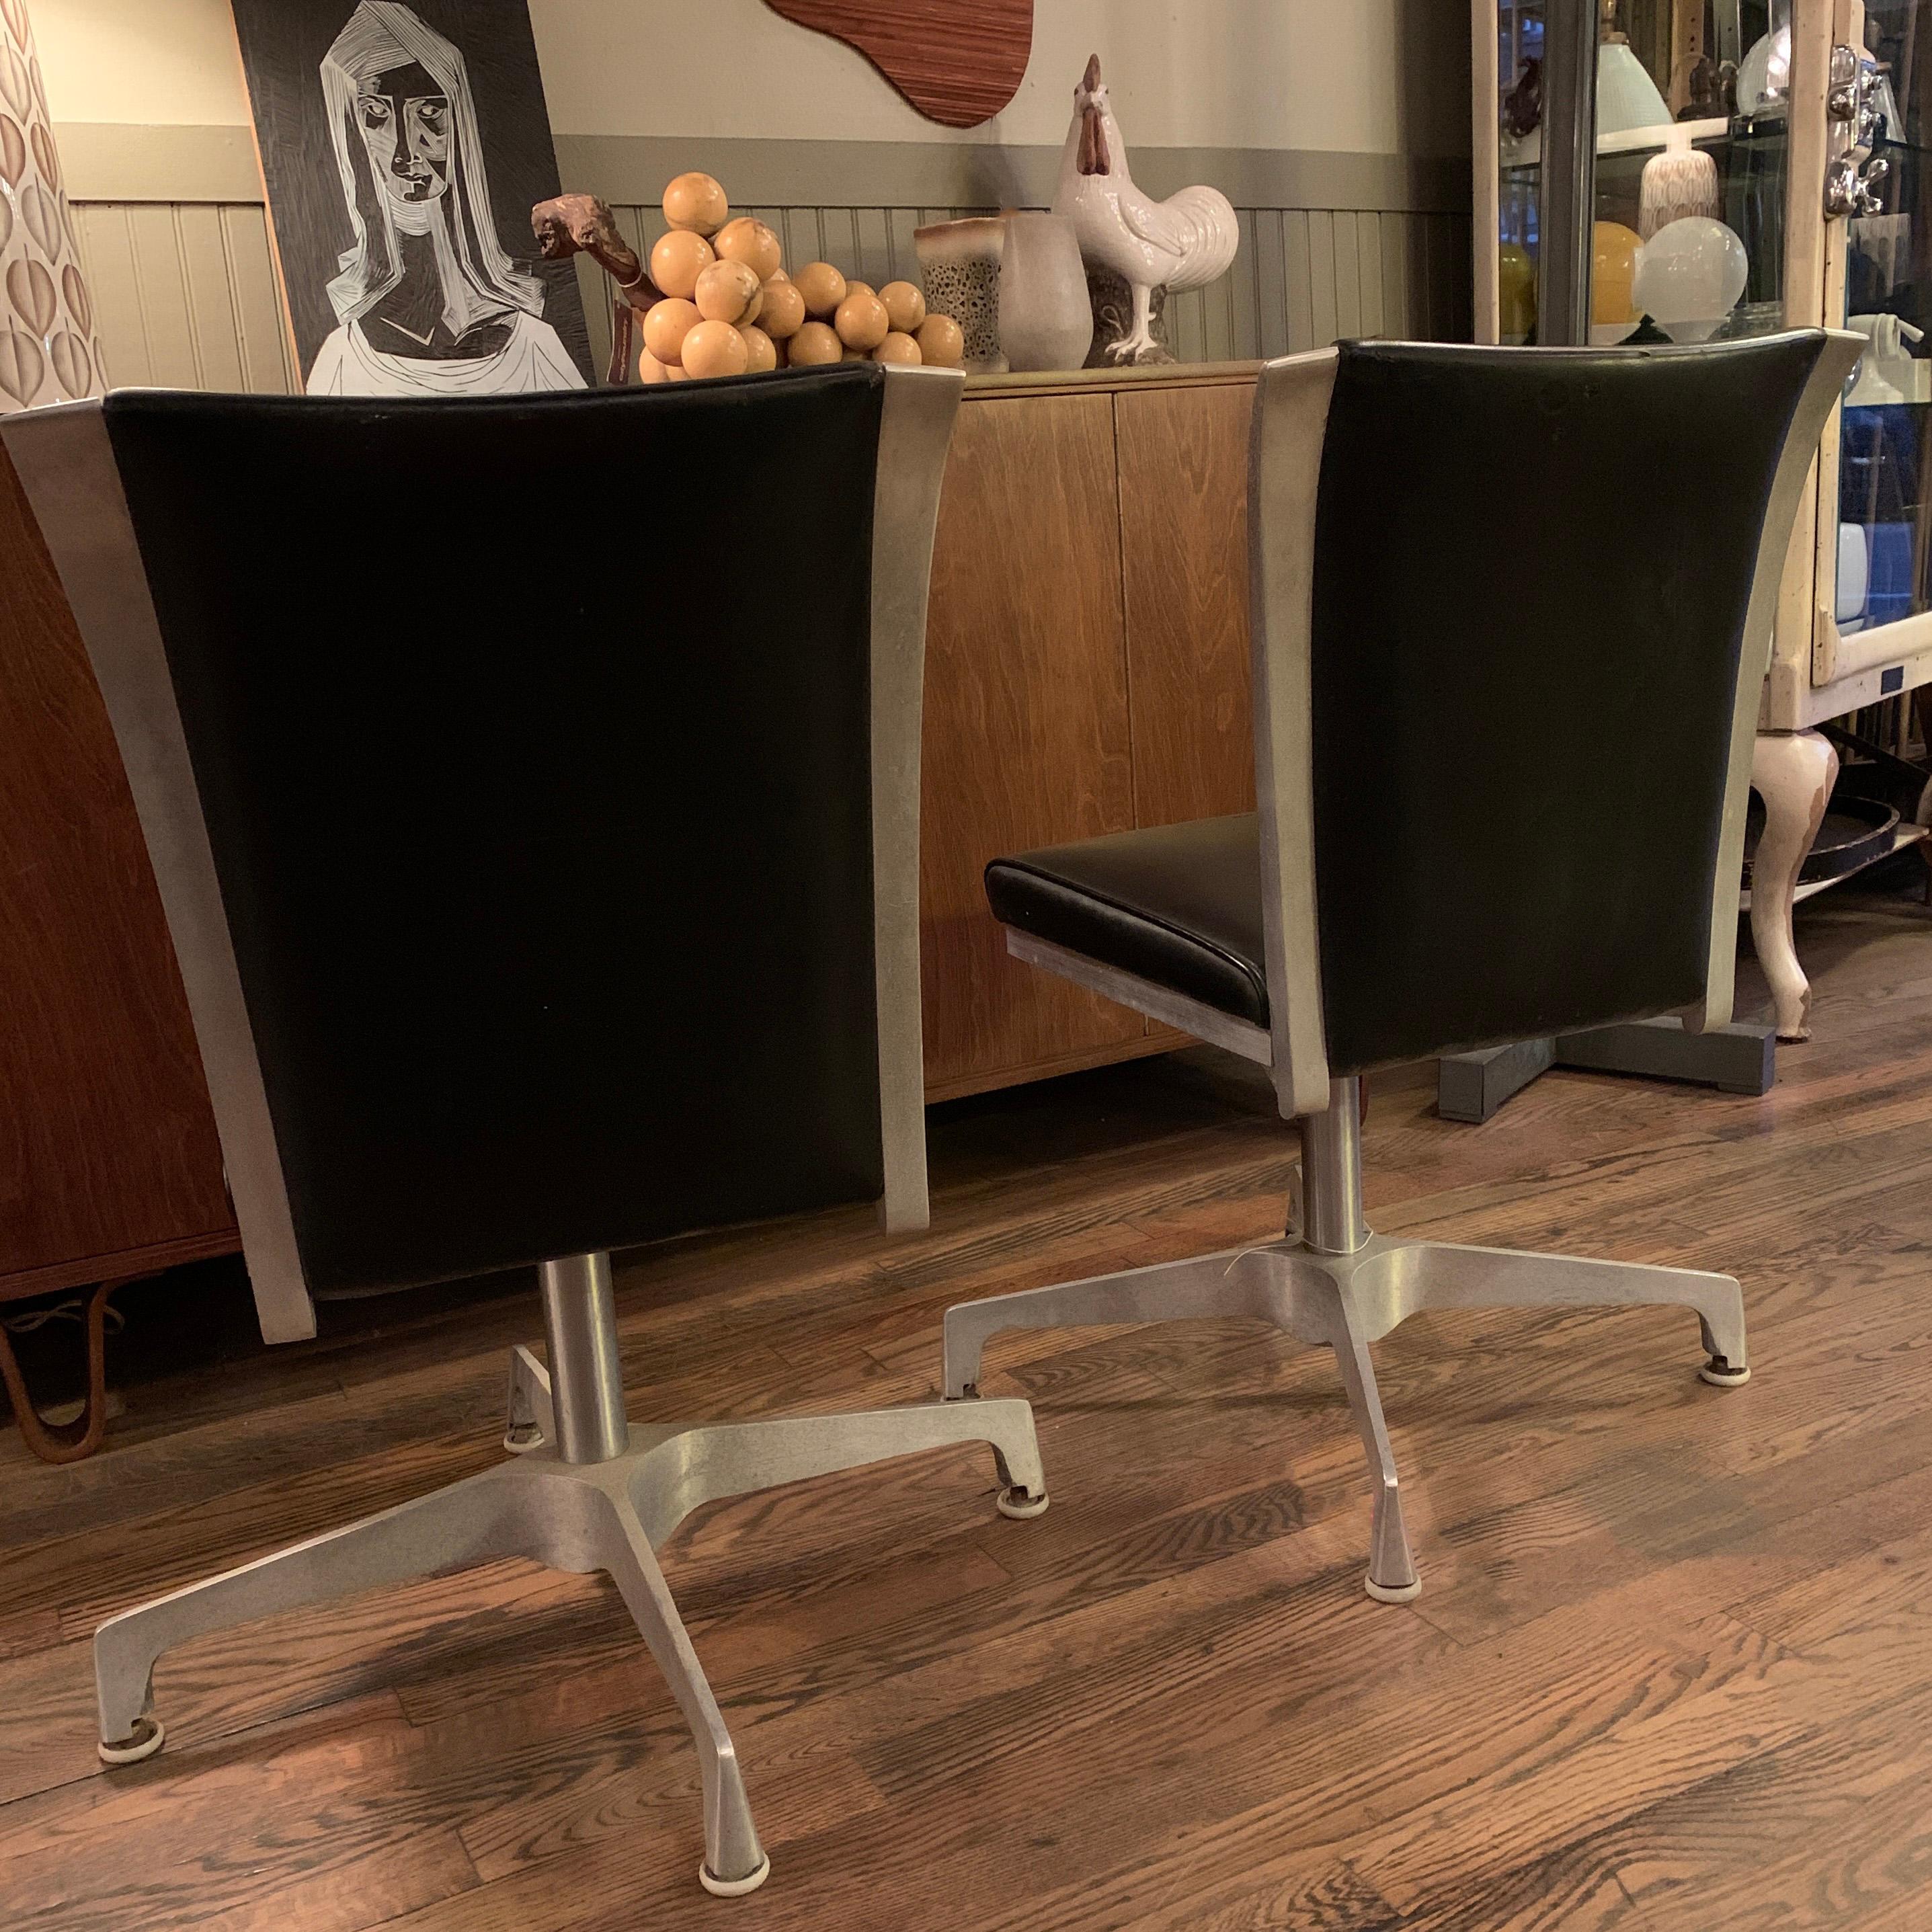 Pair of Mid-Century Modern Swivel Chairs 1